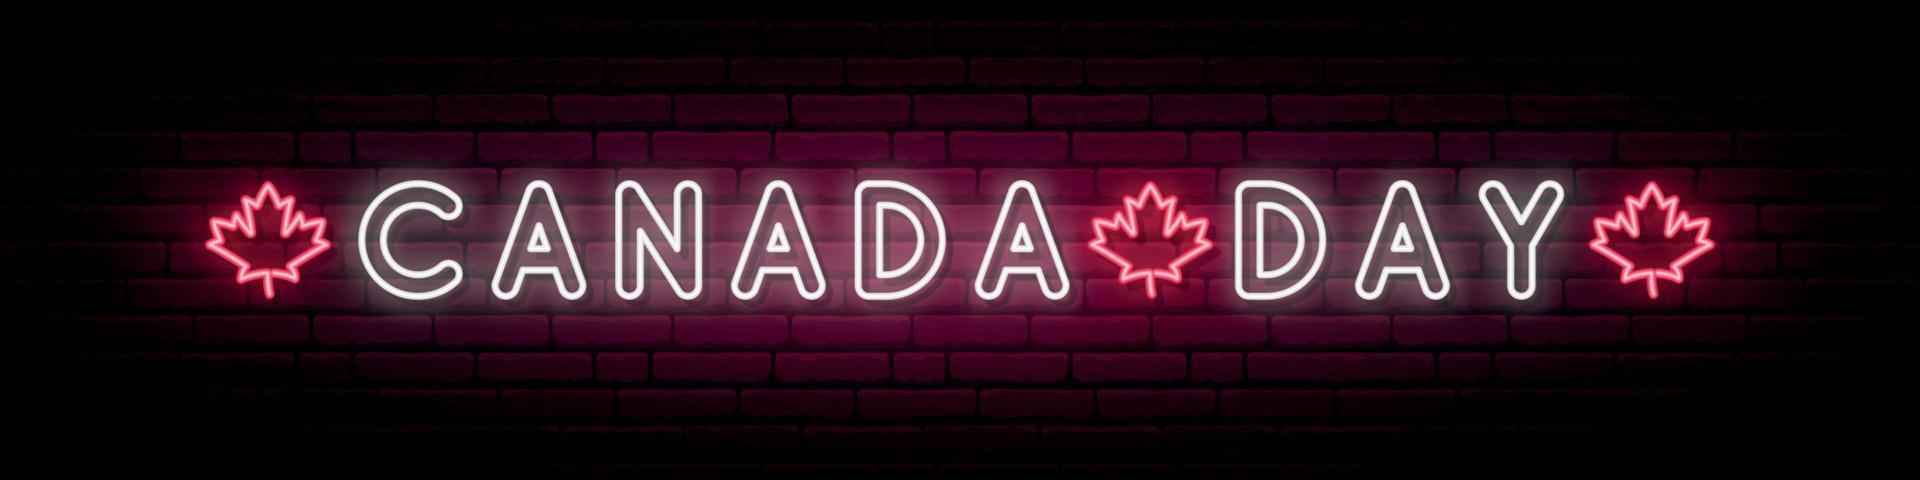 Kanada-Tag-Leuchtreklame. vektor